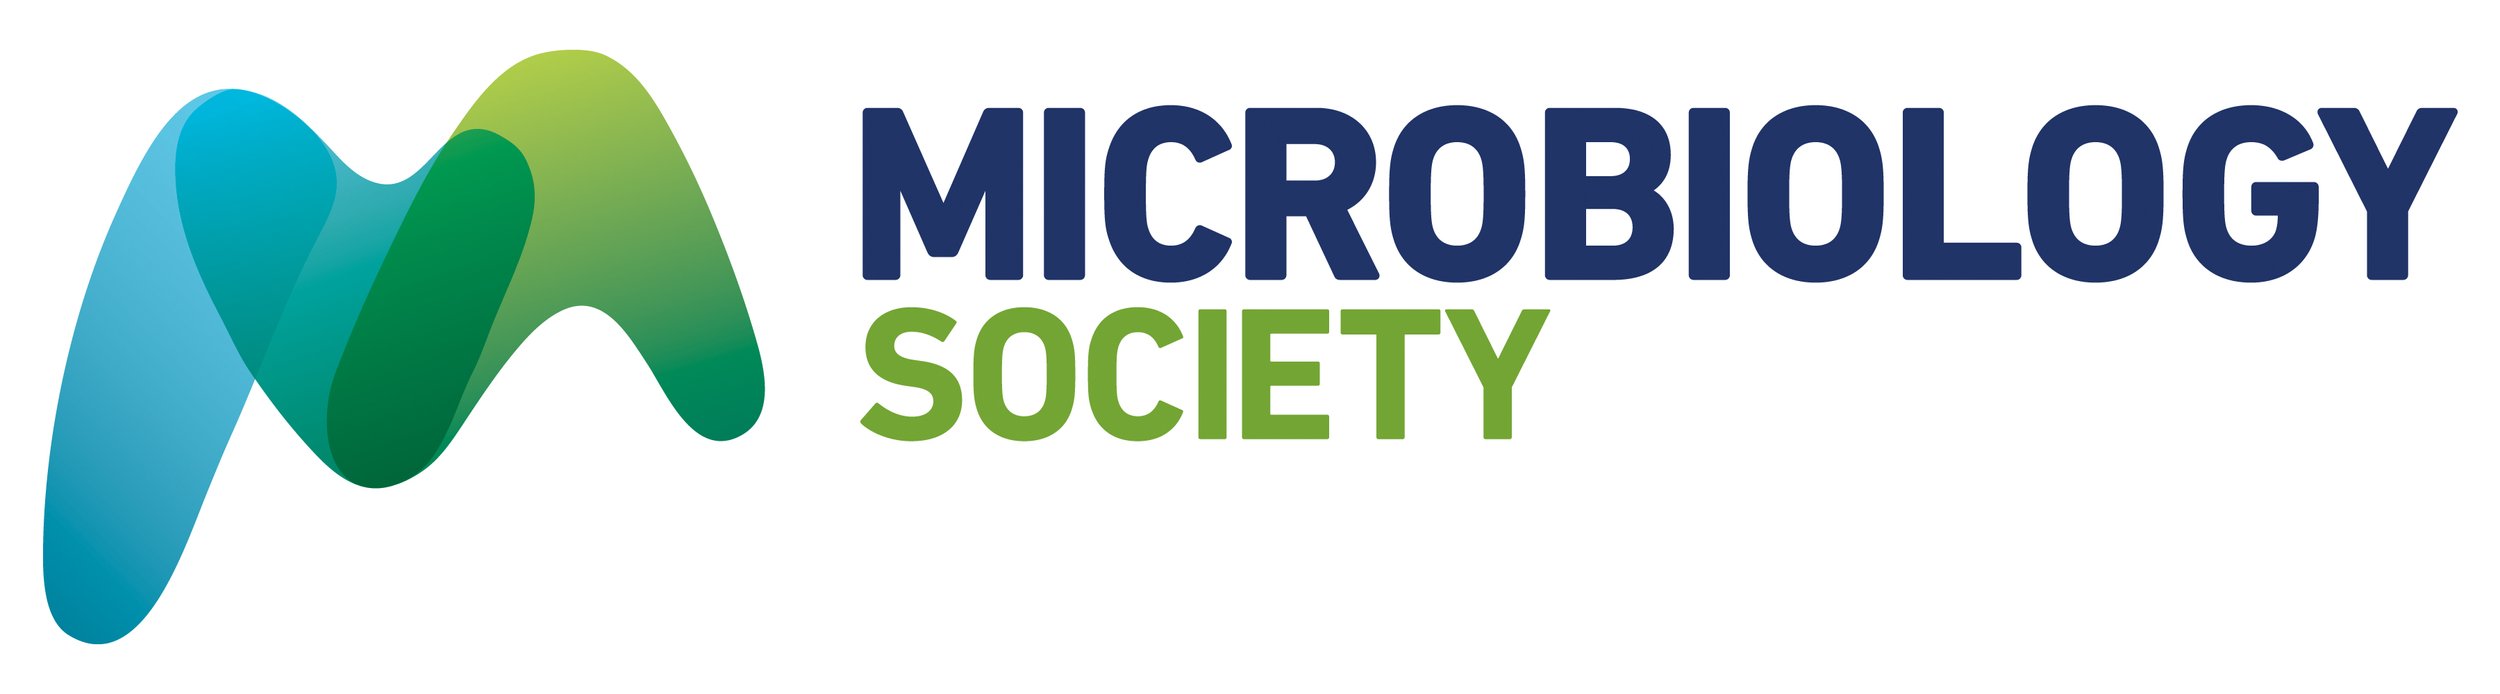 Microbiology Society logo.jpg